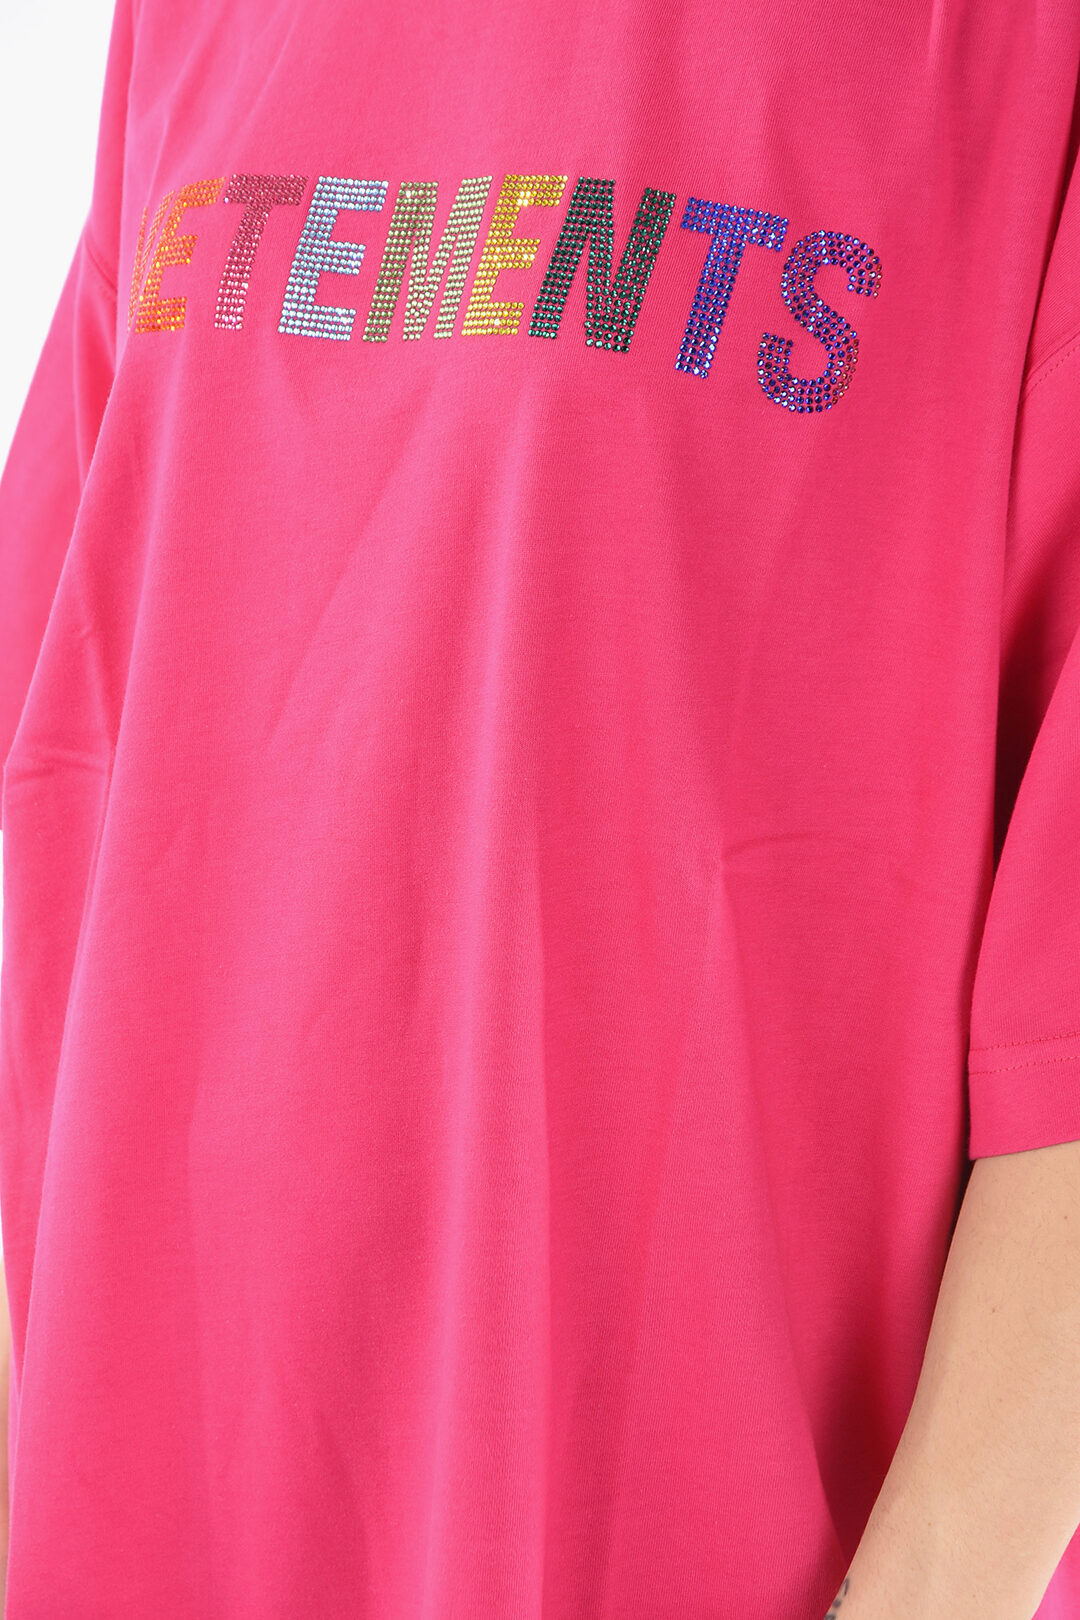 Vetements Men's Jersey Crystal-Logo T-Shirt